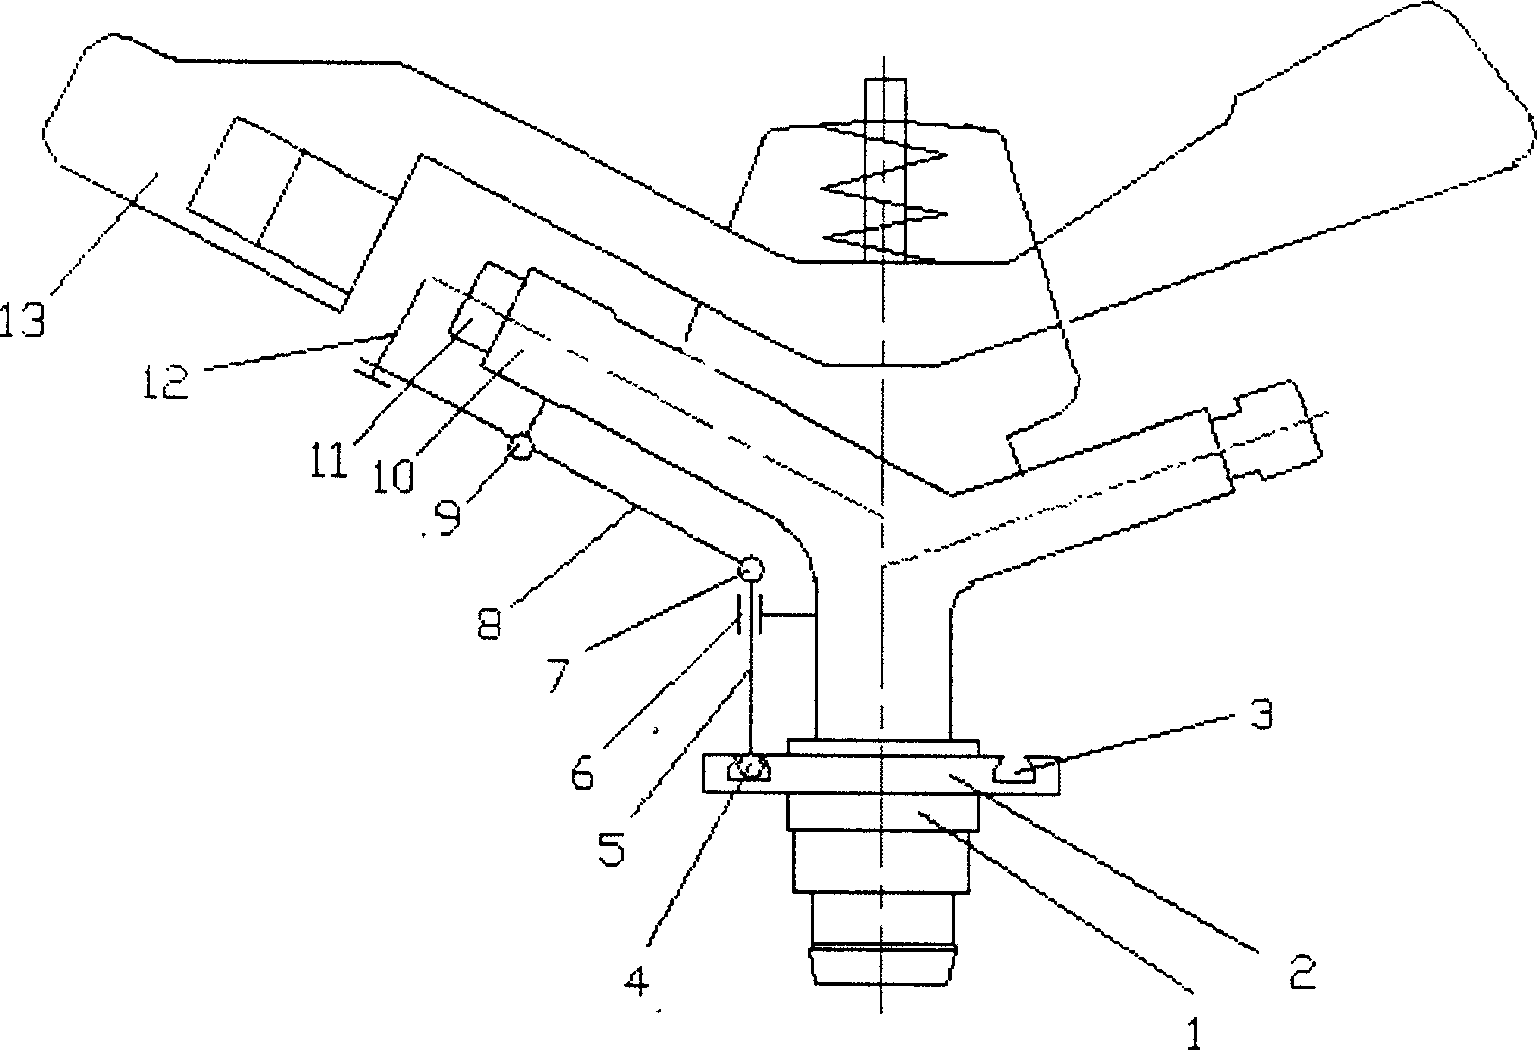 Rocking-arm type nozzle with non-circular spraying zone